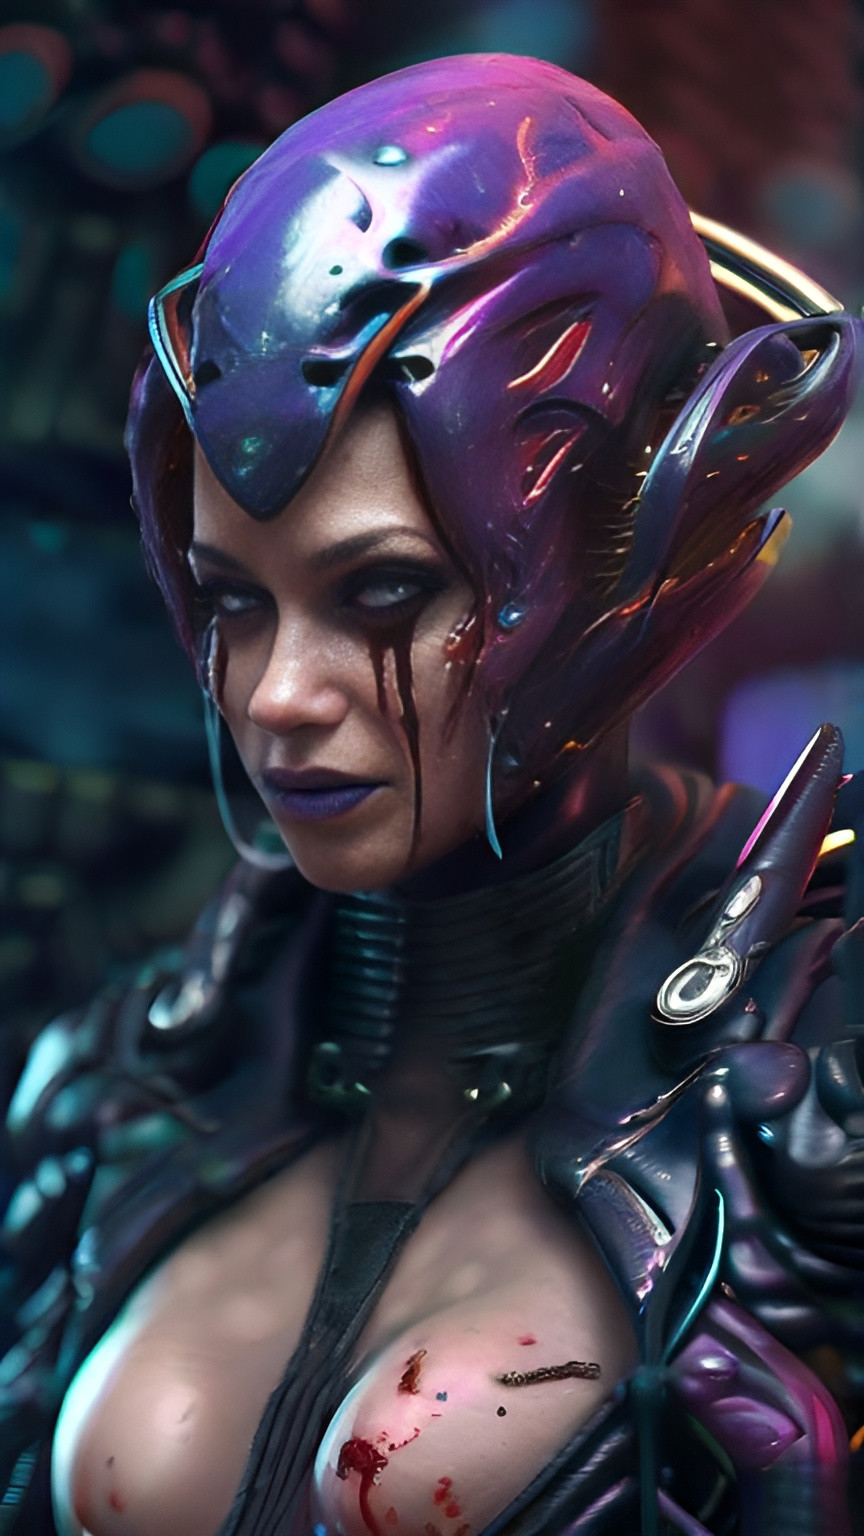 Prompt: Sci-fi, fantasy, blood splattered satanic female alien, cyberpunk inspired, sharp focus, digital art, hyper realistic, unreal engine, highly detailed, 8k resolution, colourful 